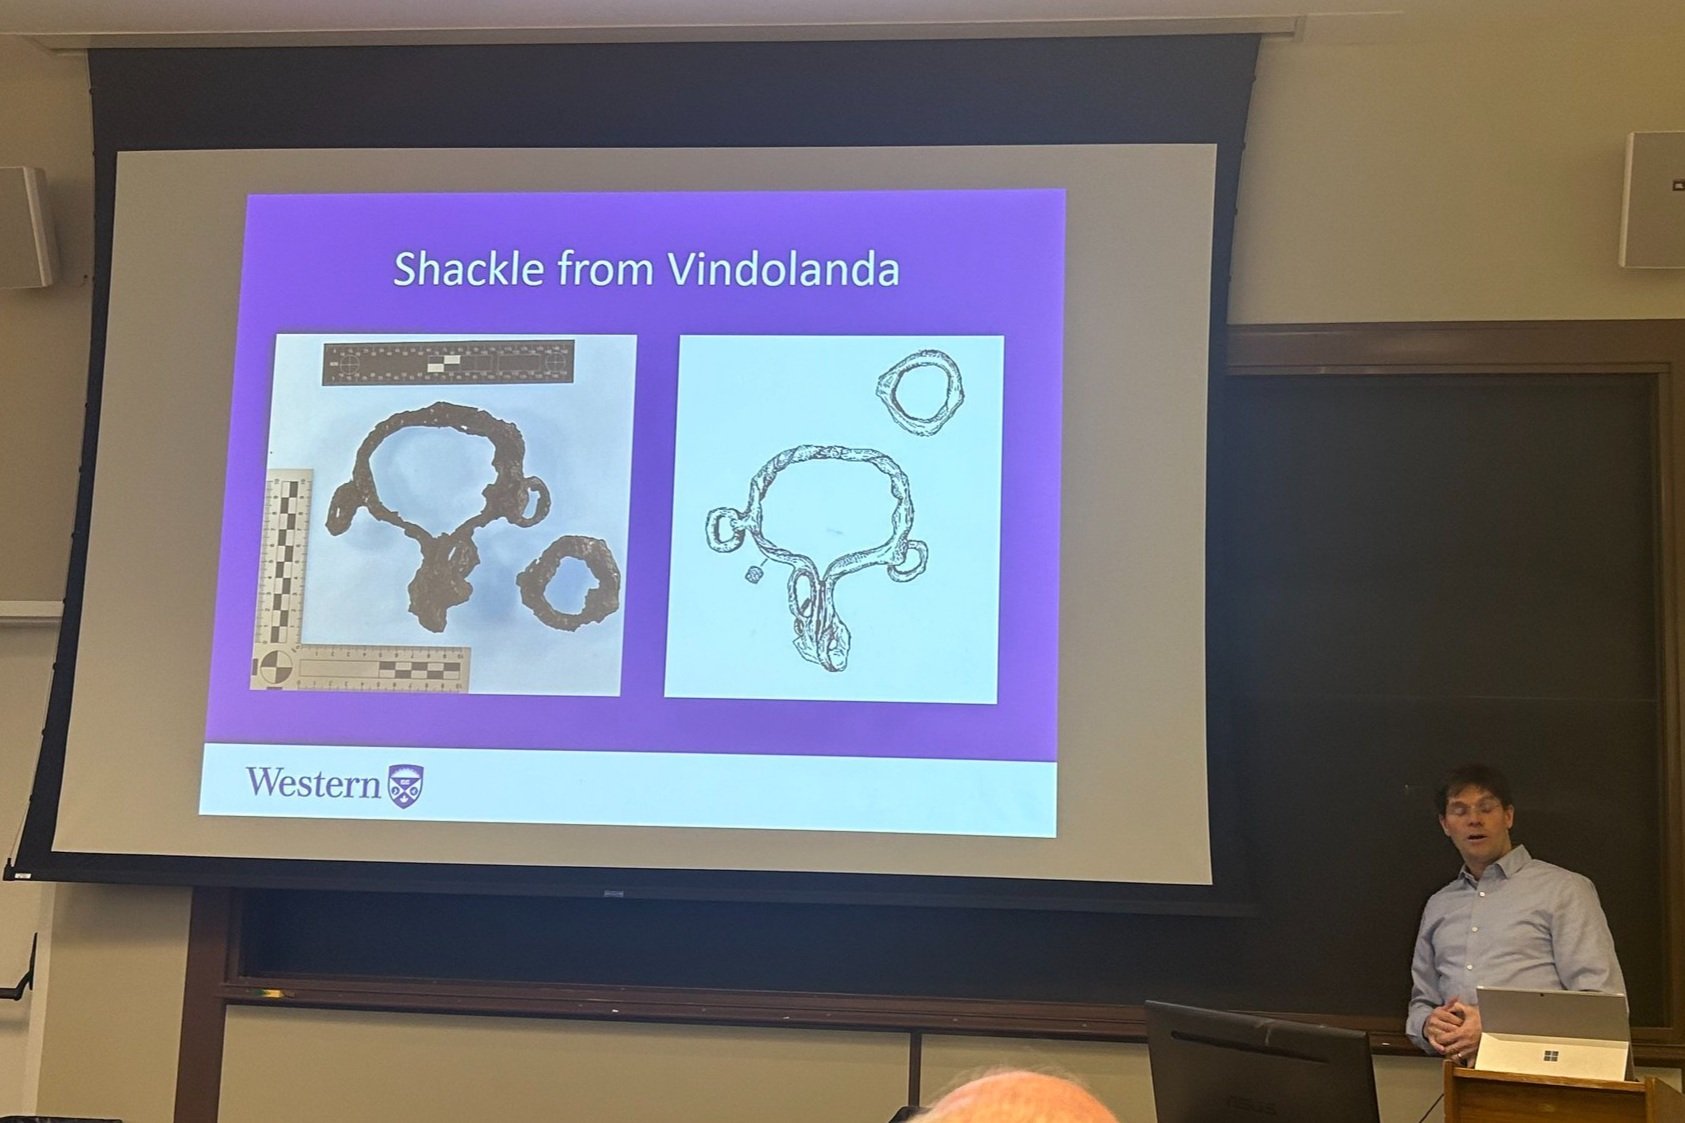  Alexander Meyer describes shackles excavated at Vindolanda. Source:  The Spectator  